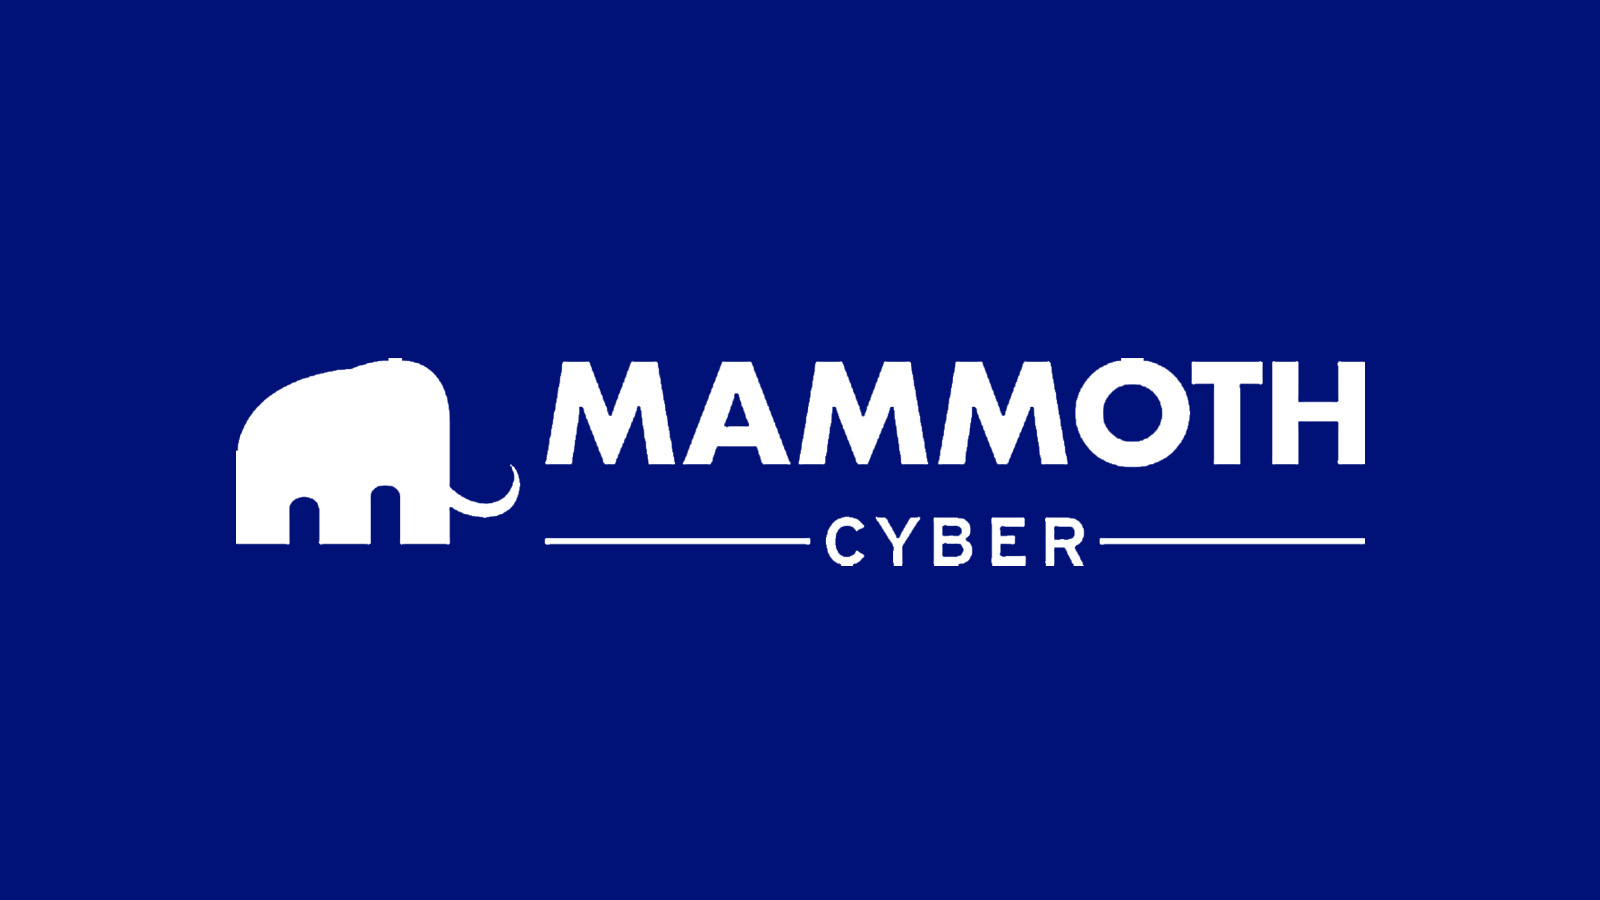 Peter Welcher talks about Mammoth Cyber